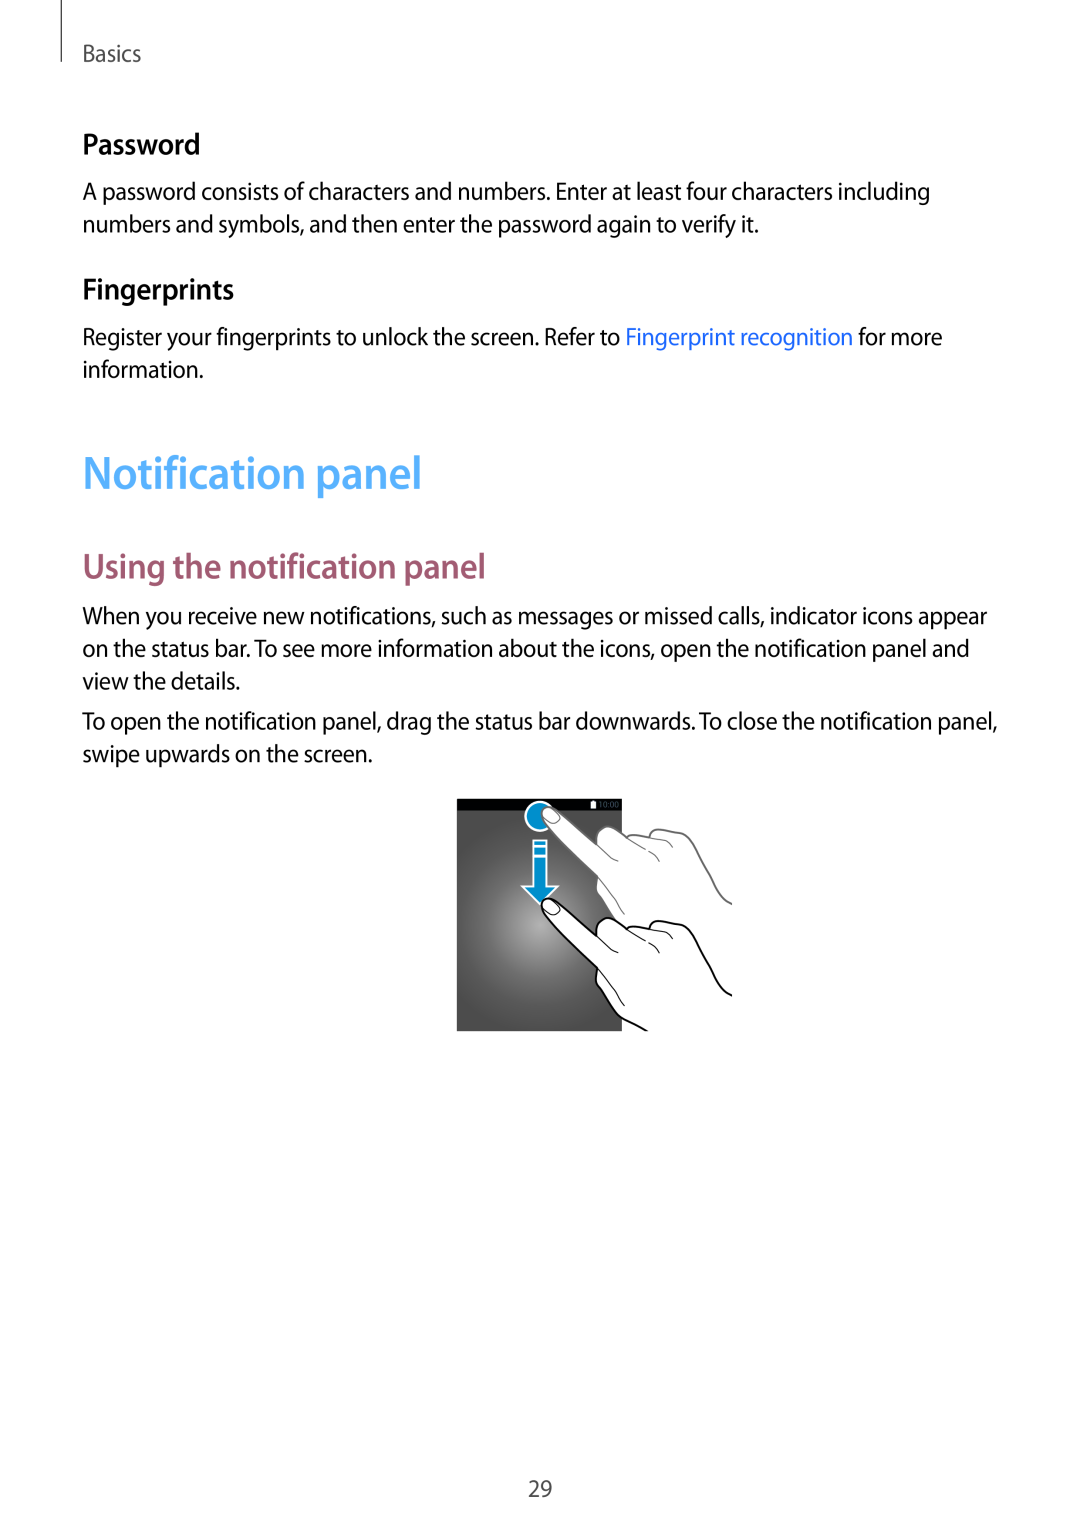 Samsung SM-G920FZKAKSA, SM-G920FZKFDBT Notification panel, Using the notification panel, Password, Fingerprints, Basics 